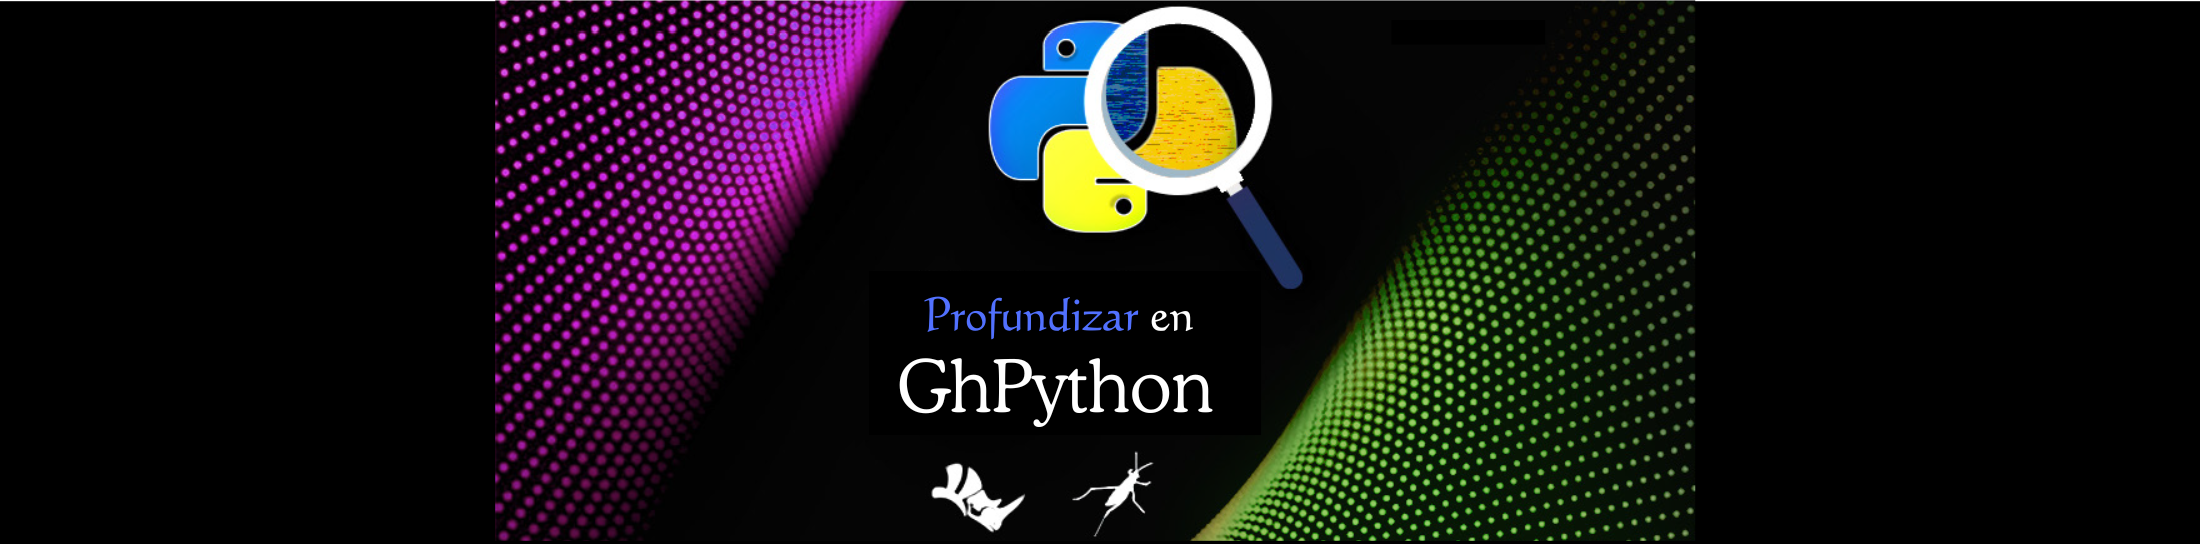 Profundizar en GhPython en español